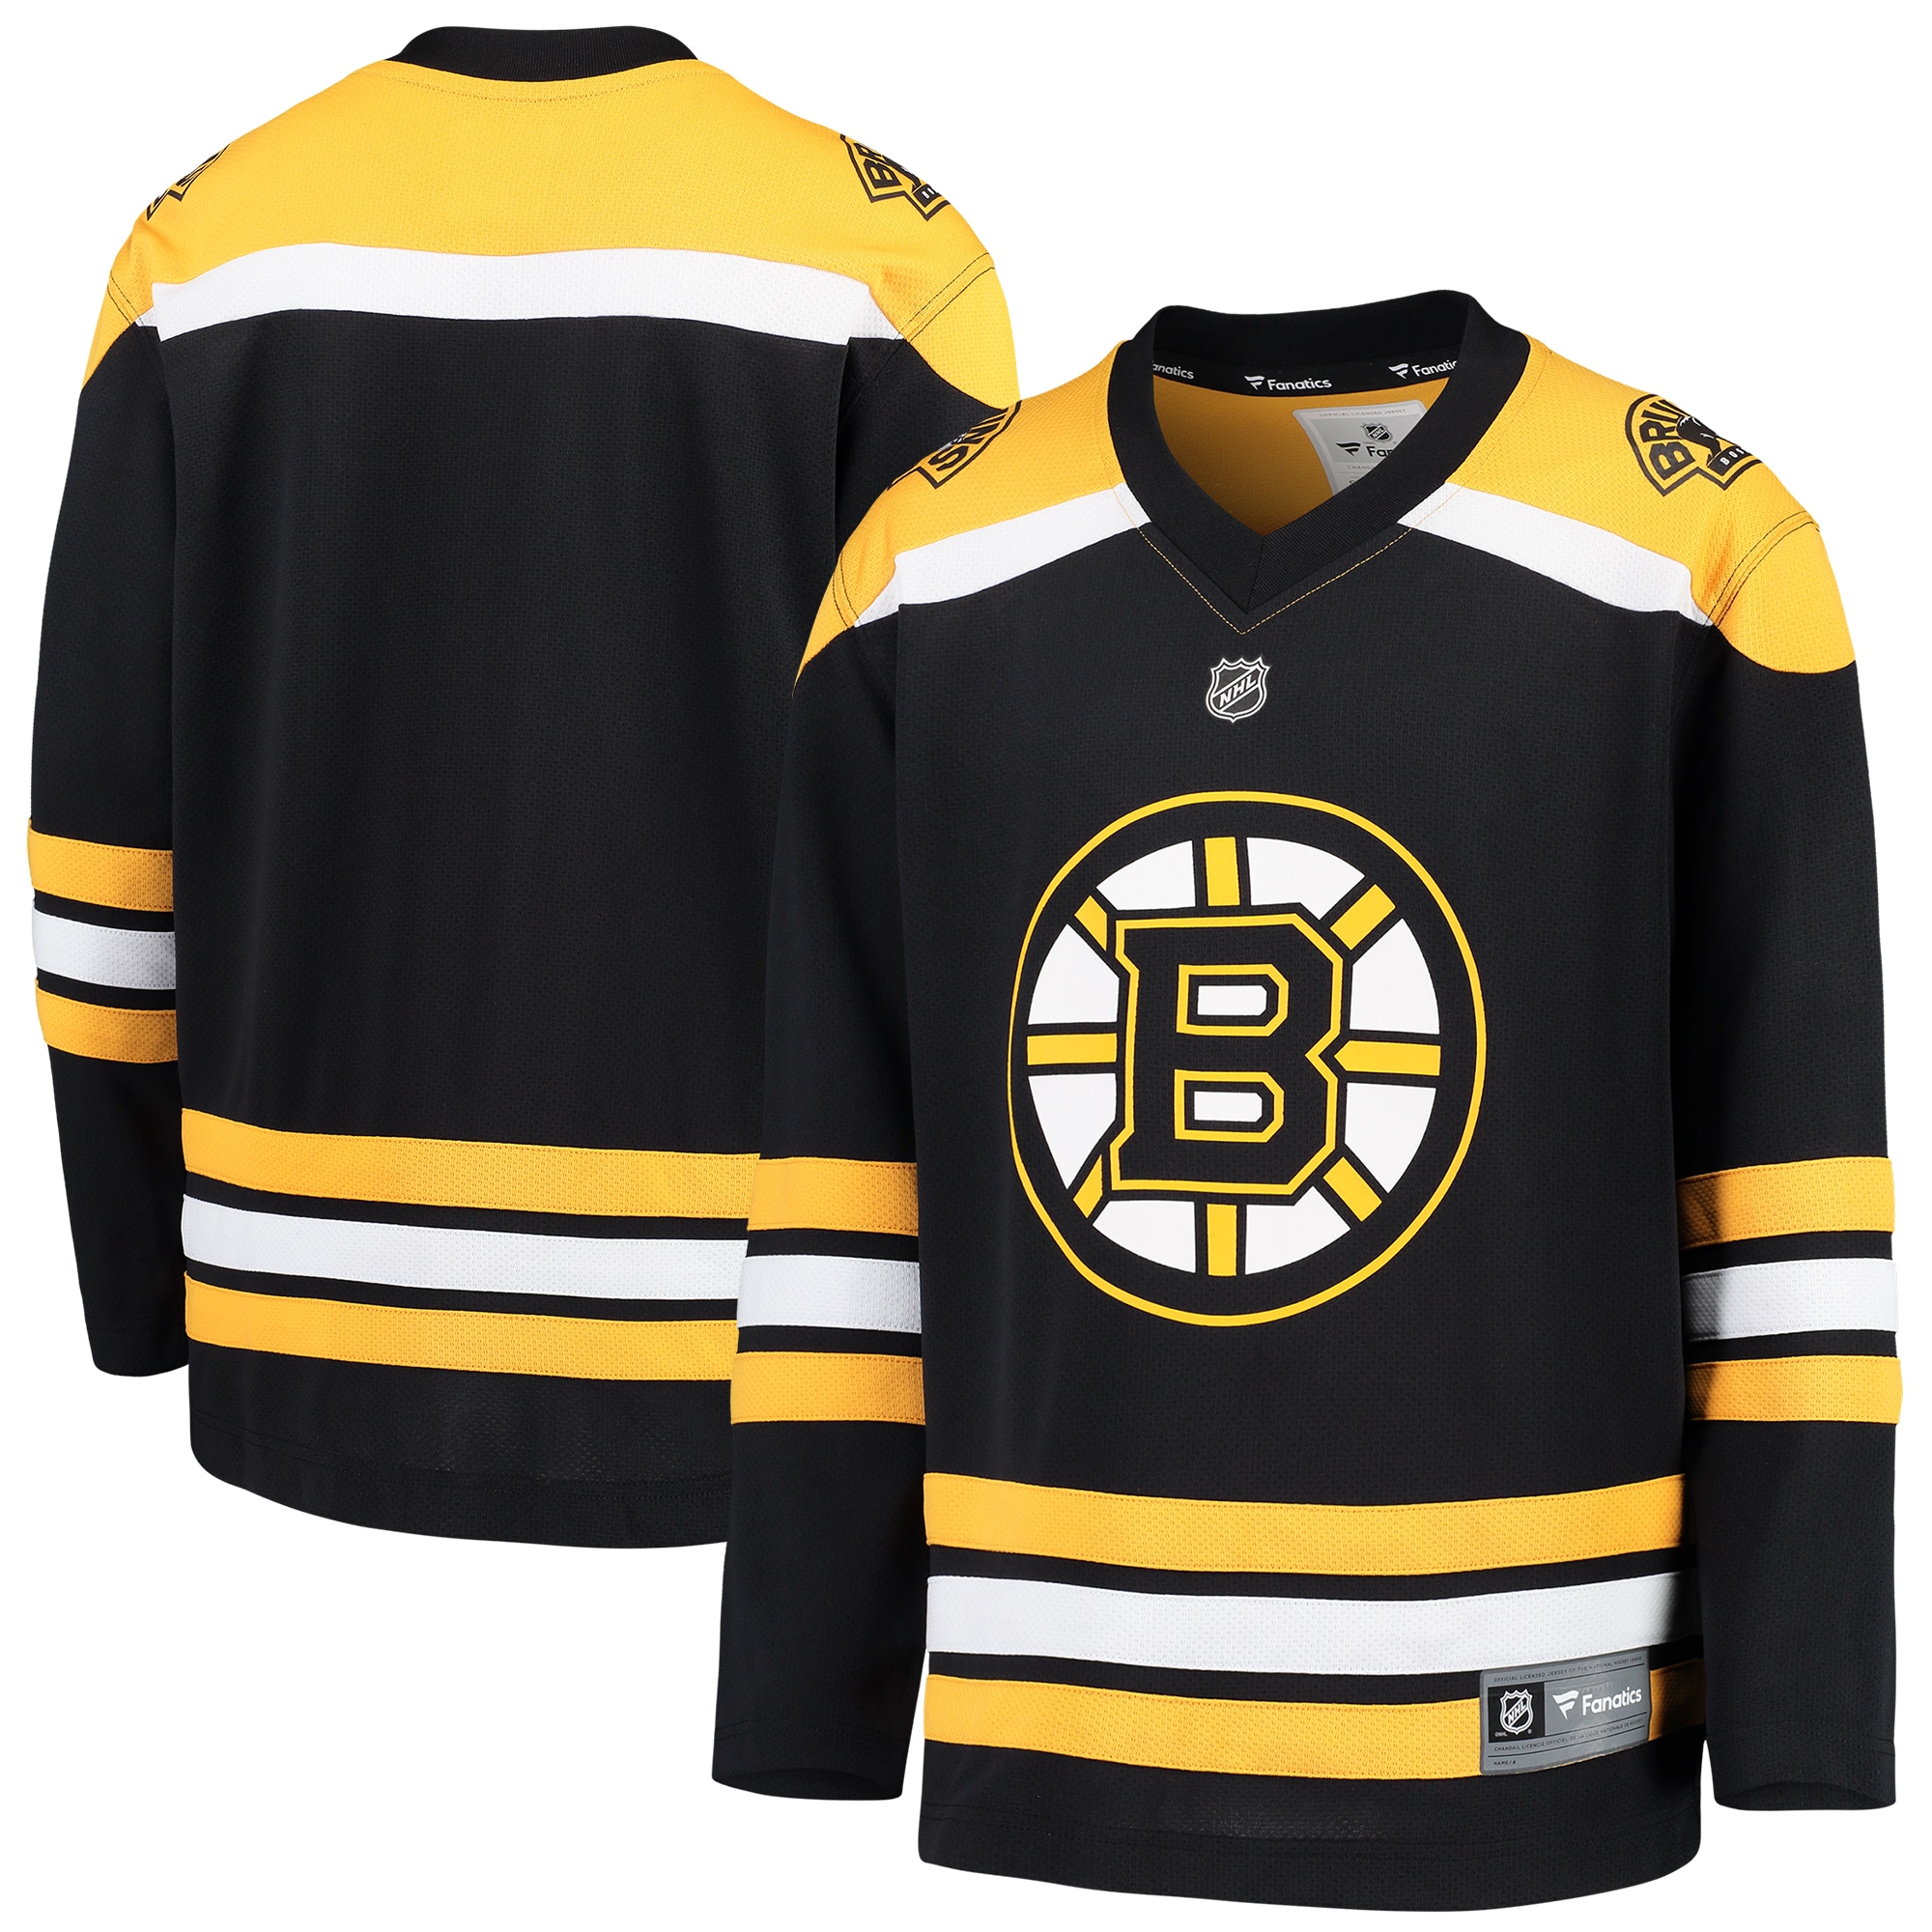 Youth Fanatics Branded Black Boston Bruins Home Replica Blank Jersey -  Walmart.com